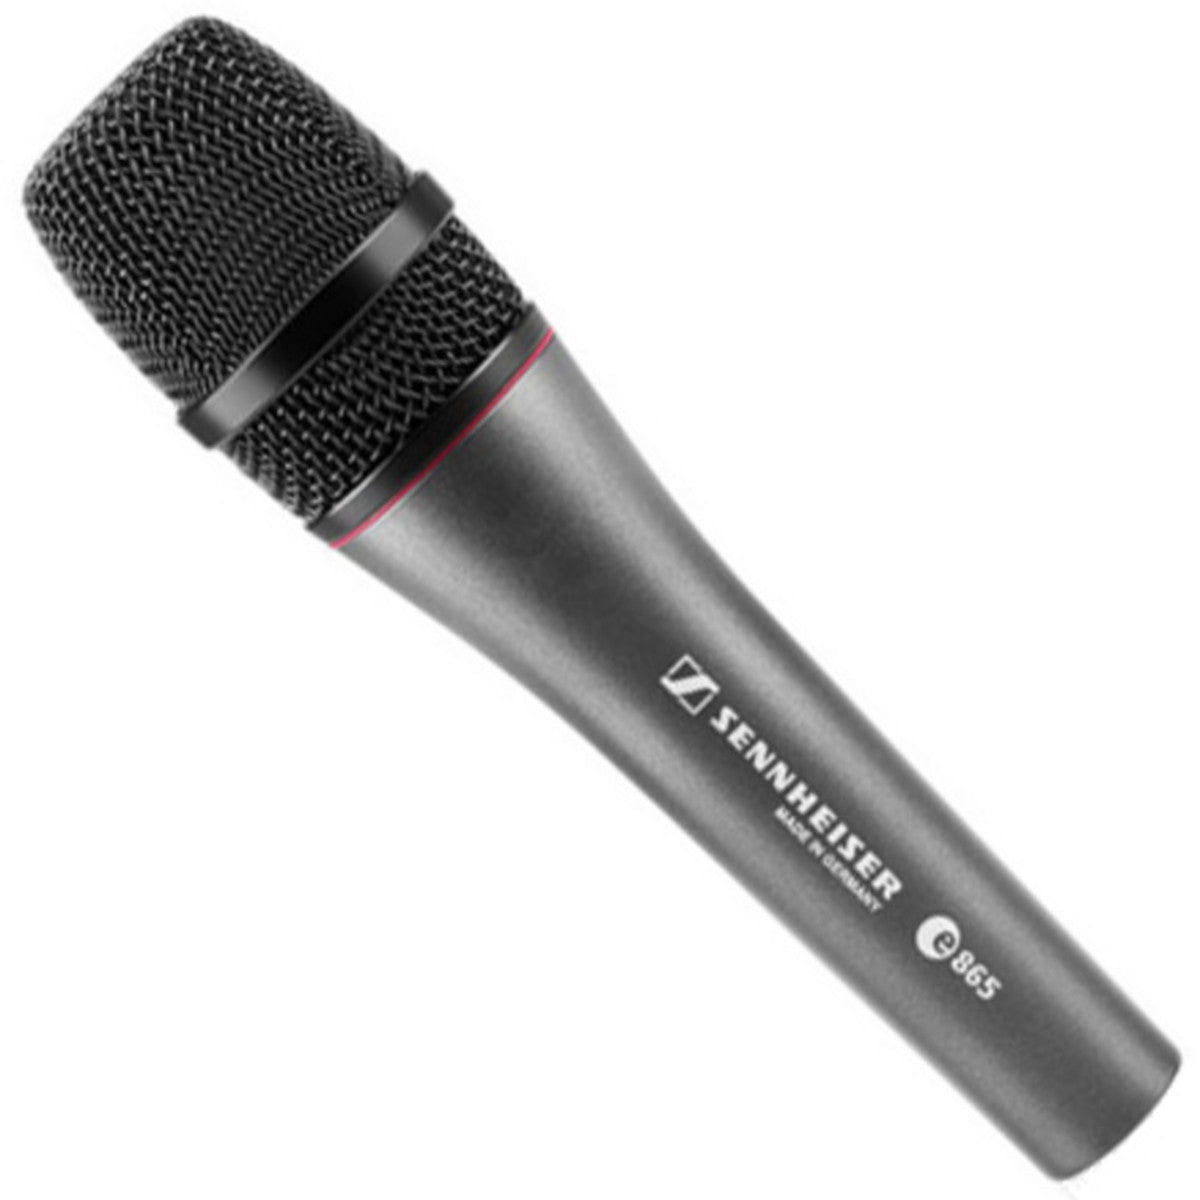 Sennheiser e865 Supercardioid Condenser Handheld Microphone